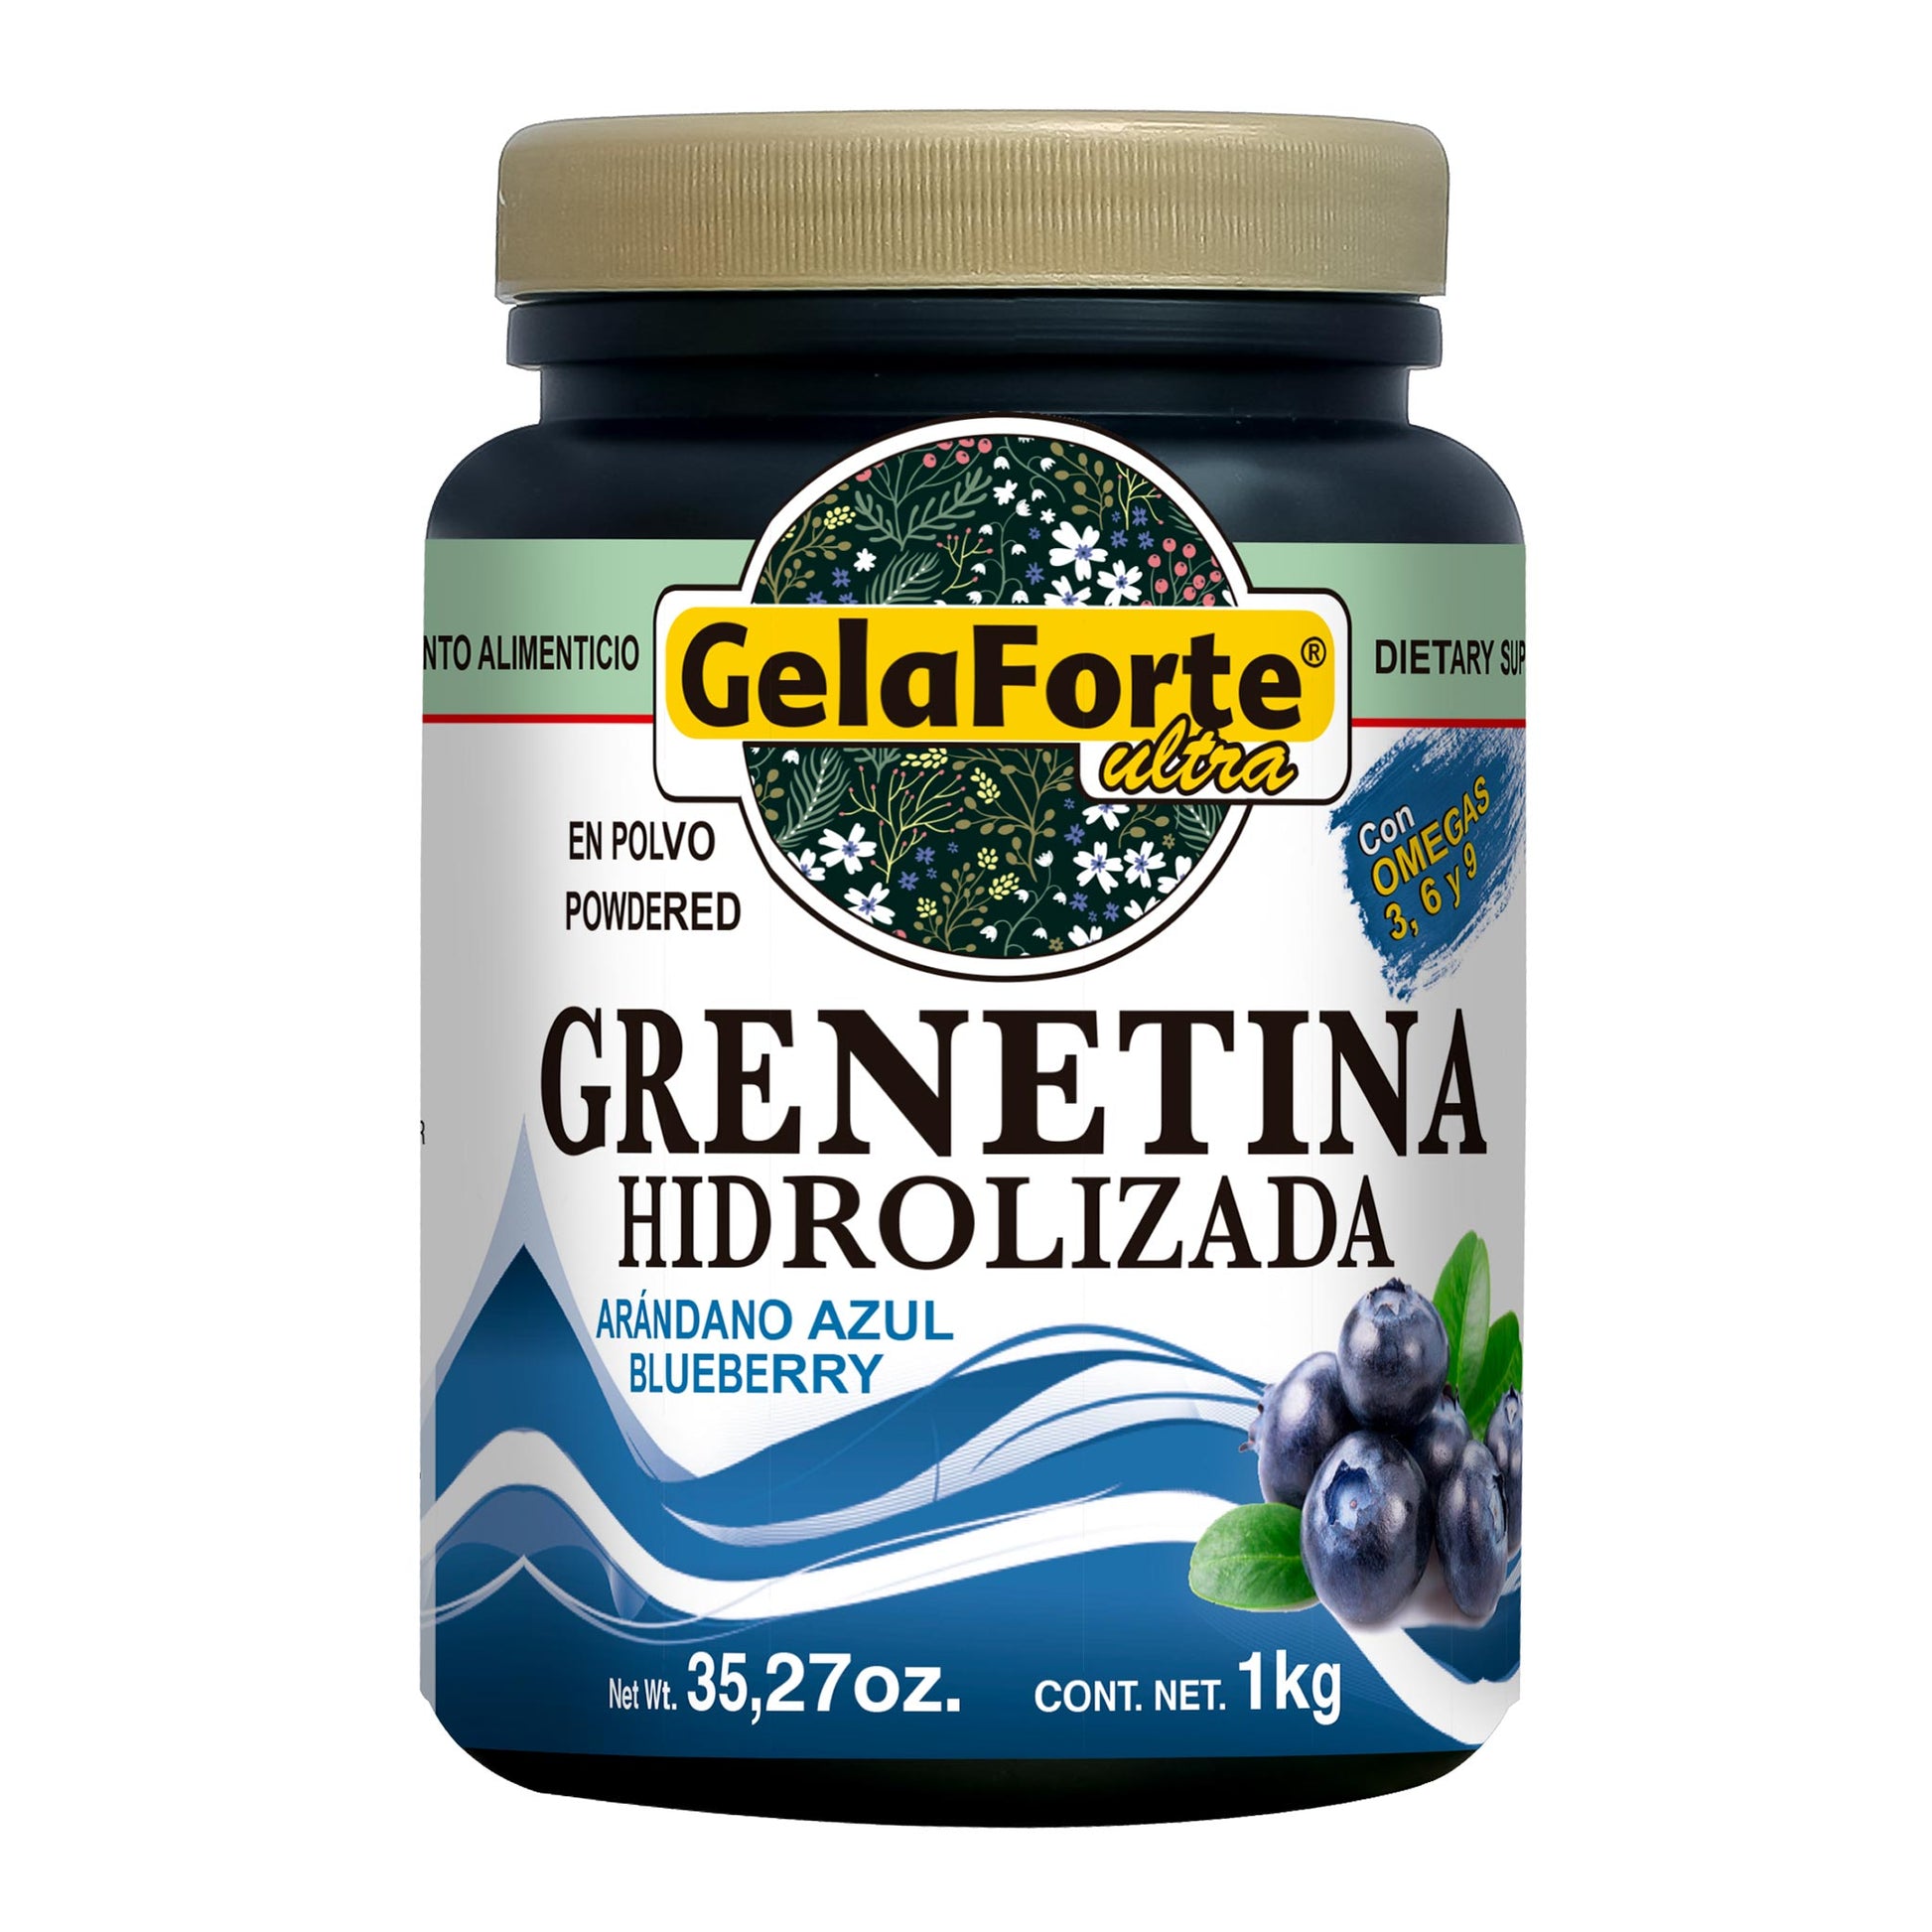 Polvo GELAFORTE ® grenetina hidrolizada sabor blueberry bolsa con 1Kg